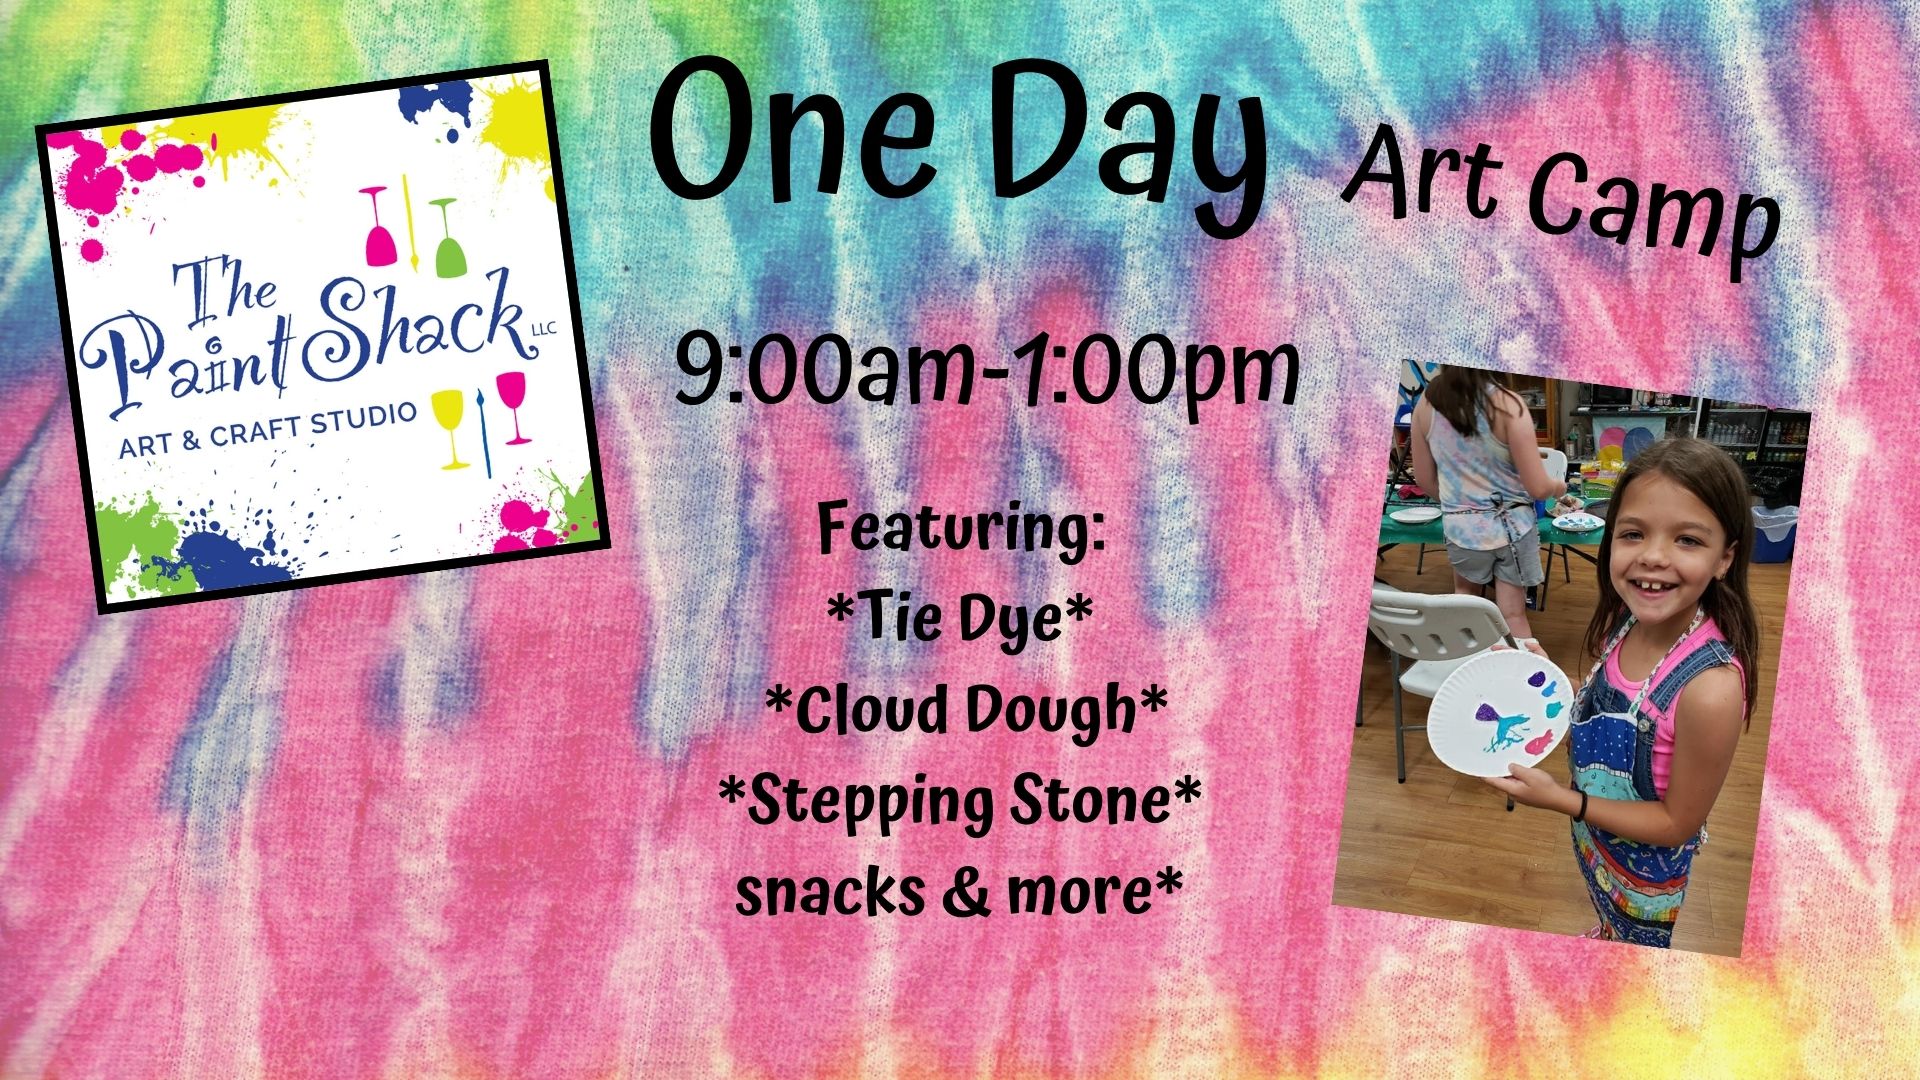 *1 DAY ART CAMP - (Tie Dye, Stepping Stones & Cloud Dough)